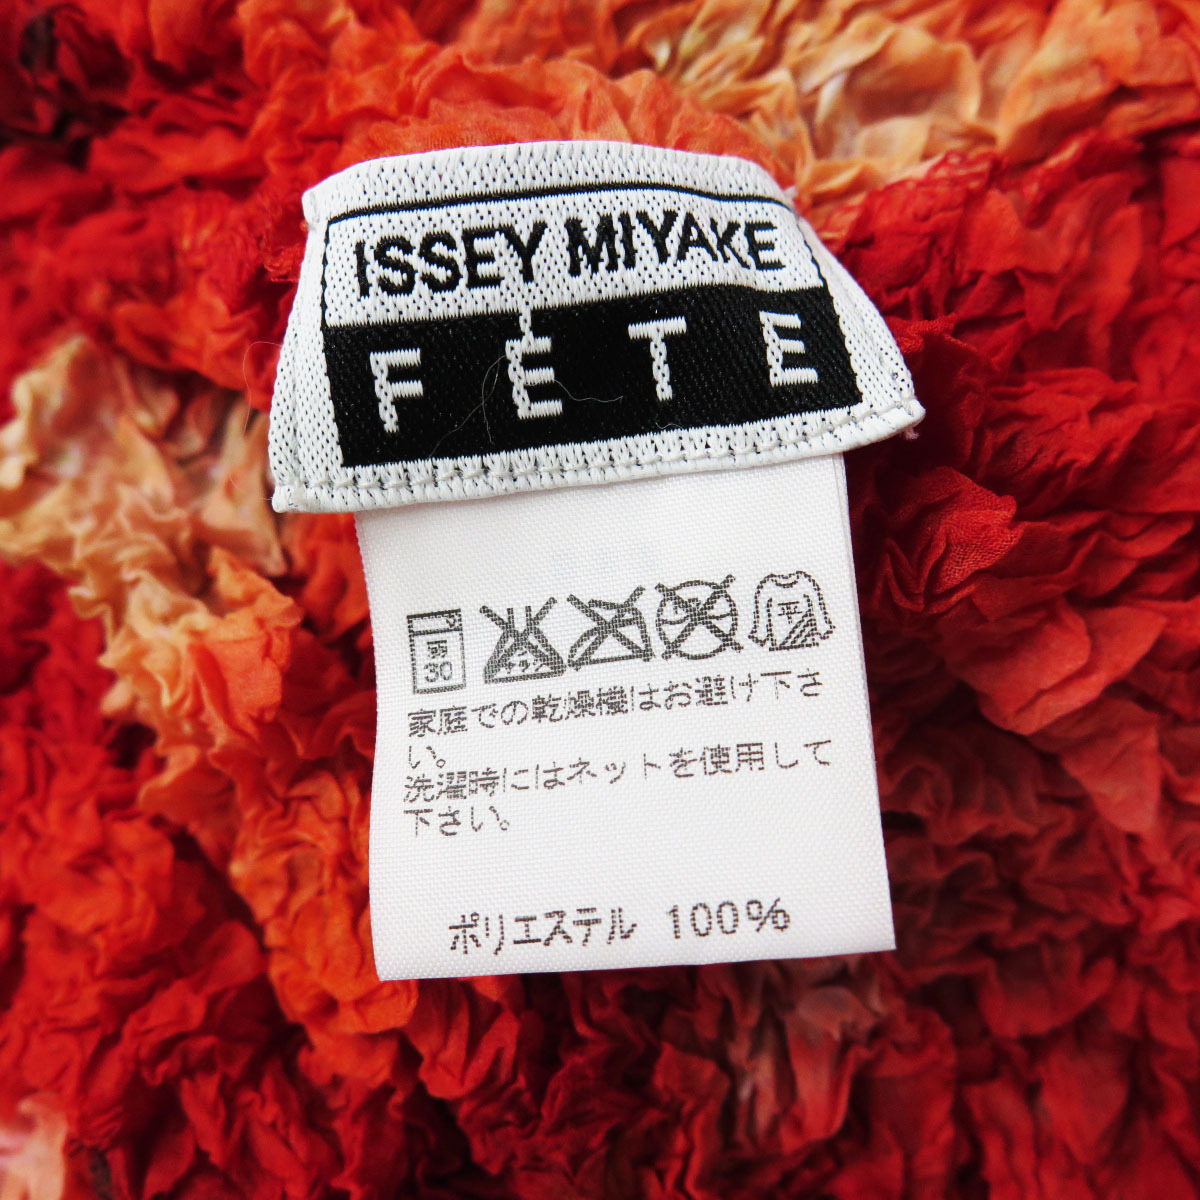 2008 ISSEY MIYAKE FETE TOMATO PLEATS SHIRT イッセイミヤケ フェット トマト プリーツ シャツ プリーツプリーズ の画像8